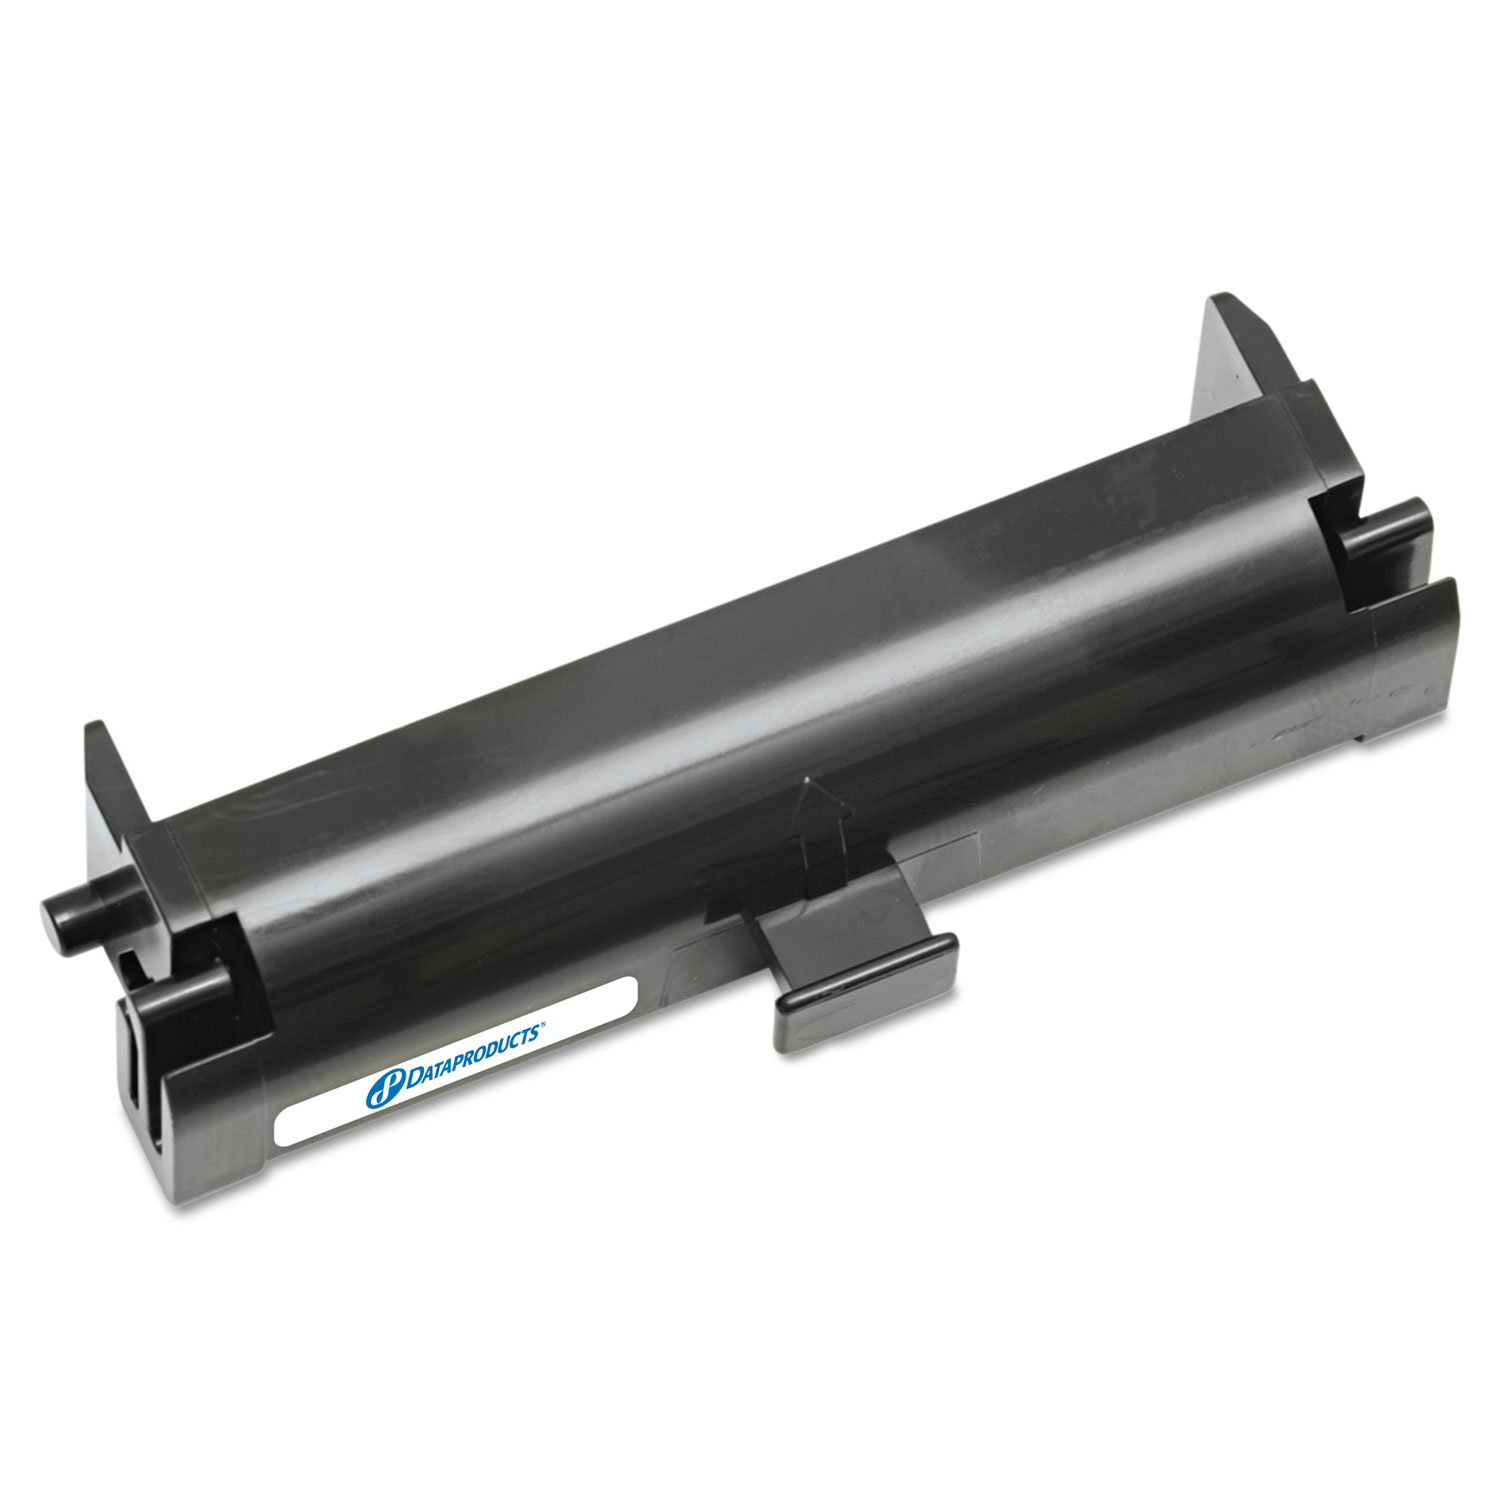  Dataproducts R1150 R1150 Compatible Ink Roller, Black (DPSR1150) 